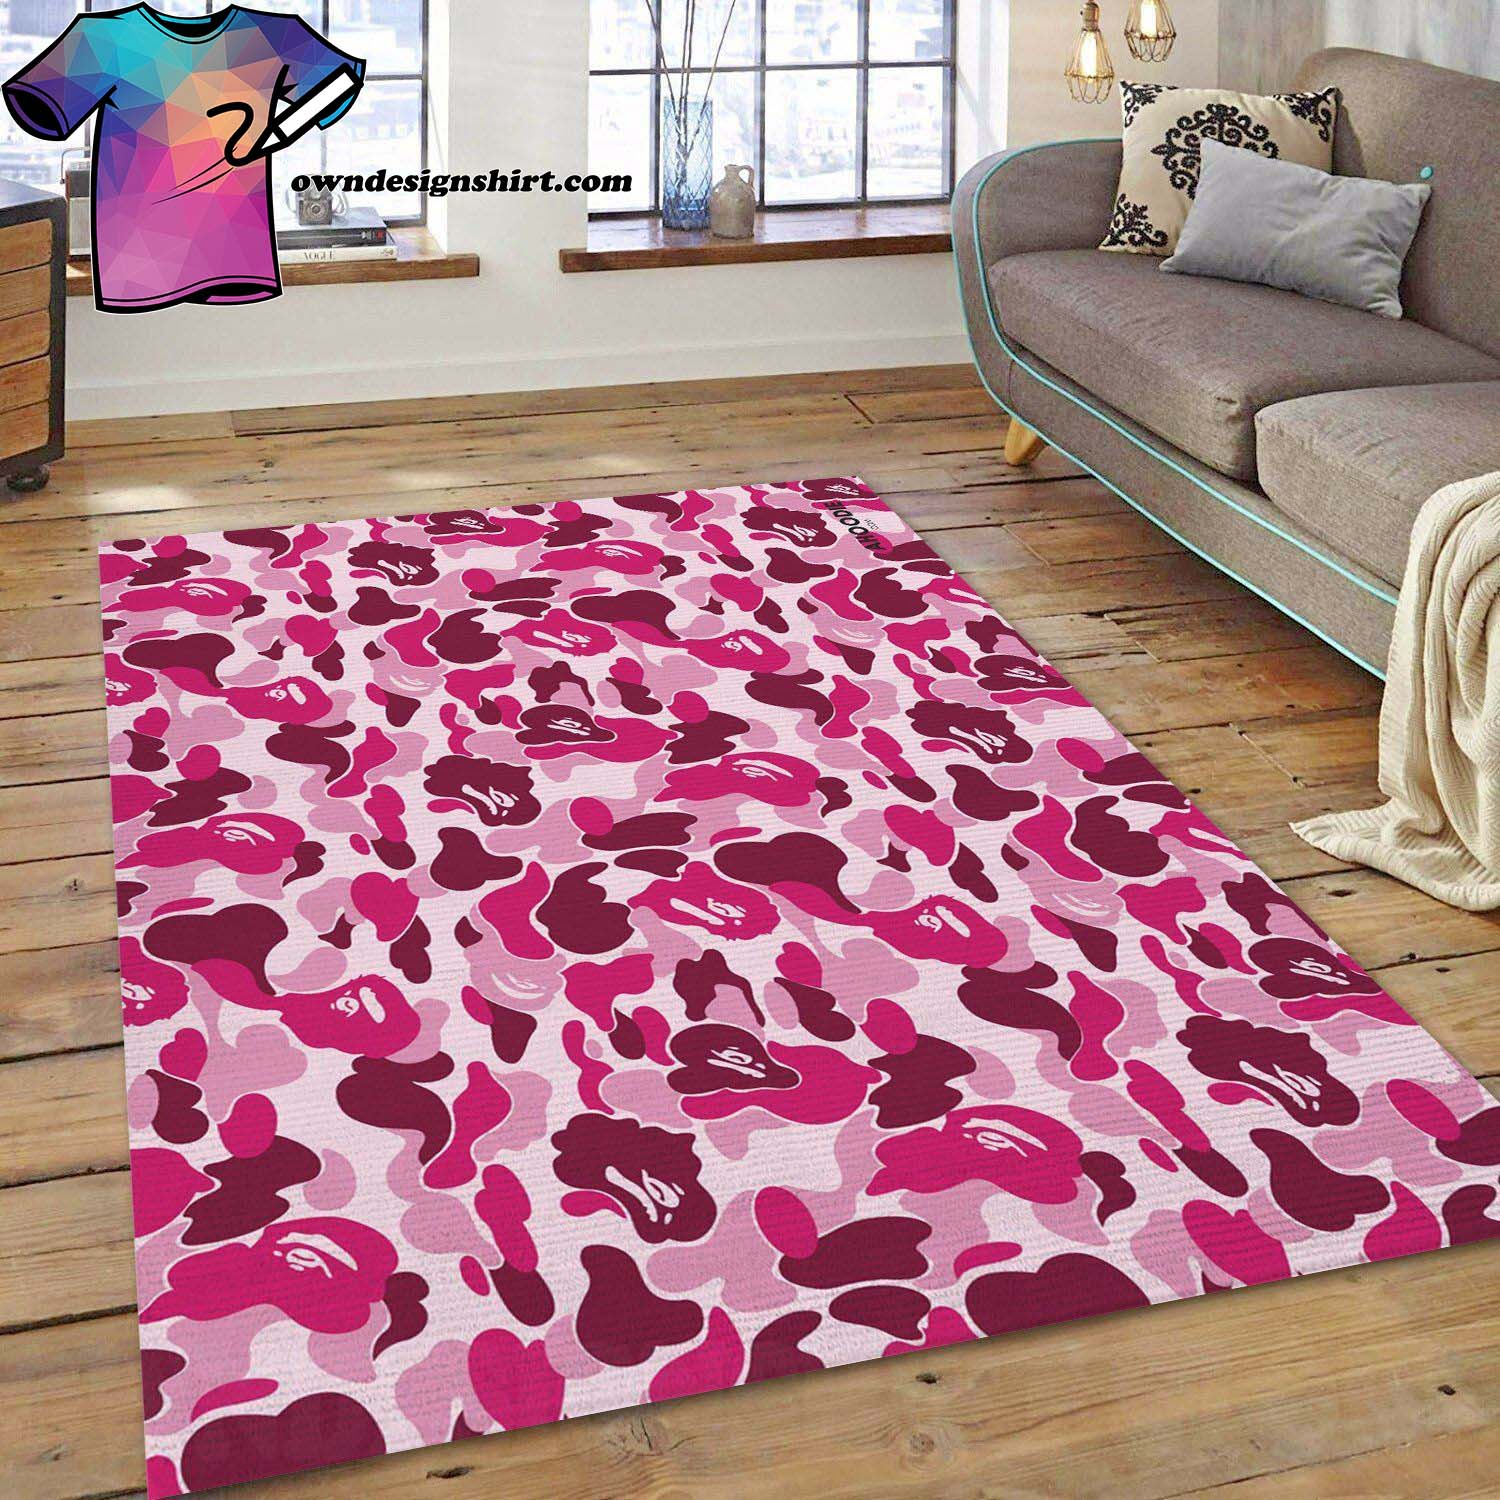 SUPREME BAPE CAMO SHARK Living room carpet rugs - Coverszy